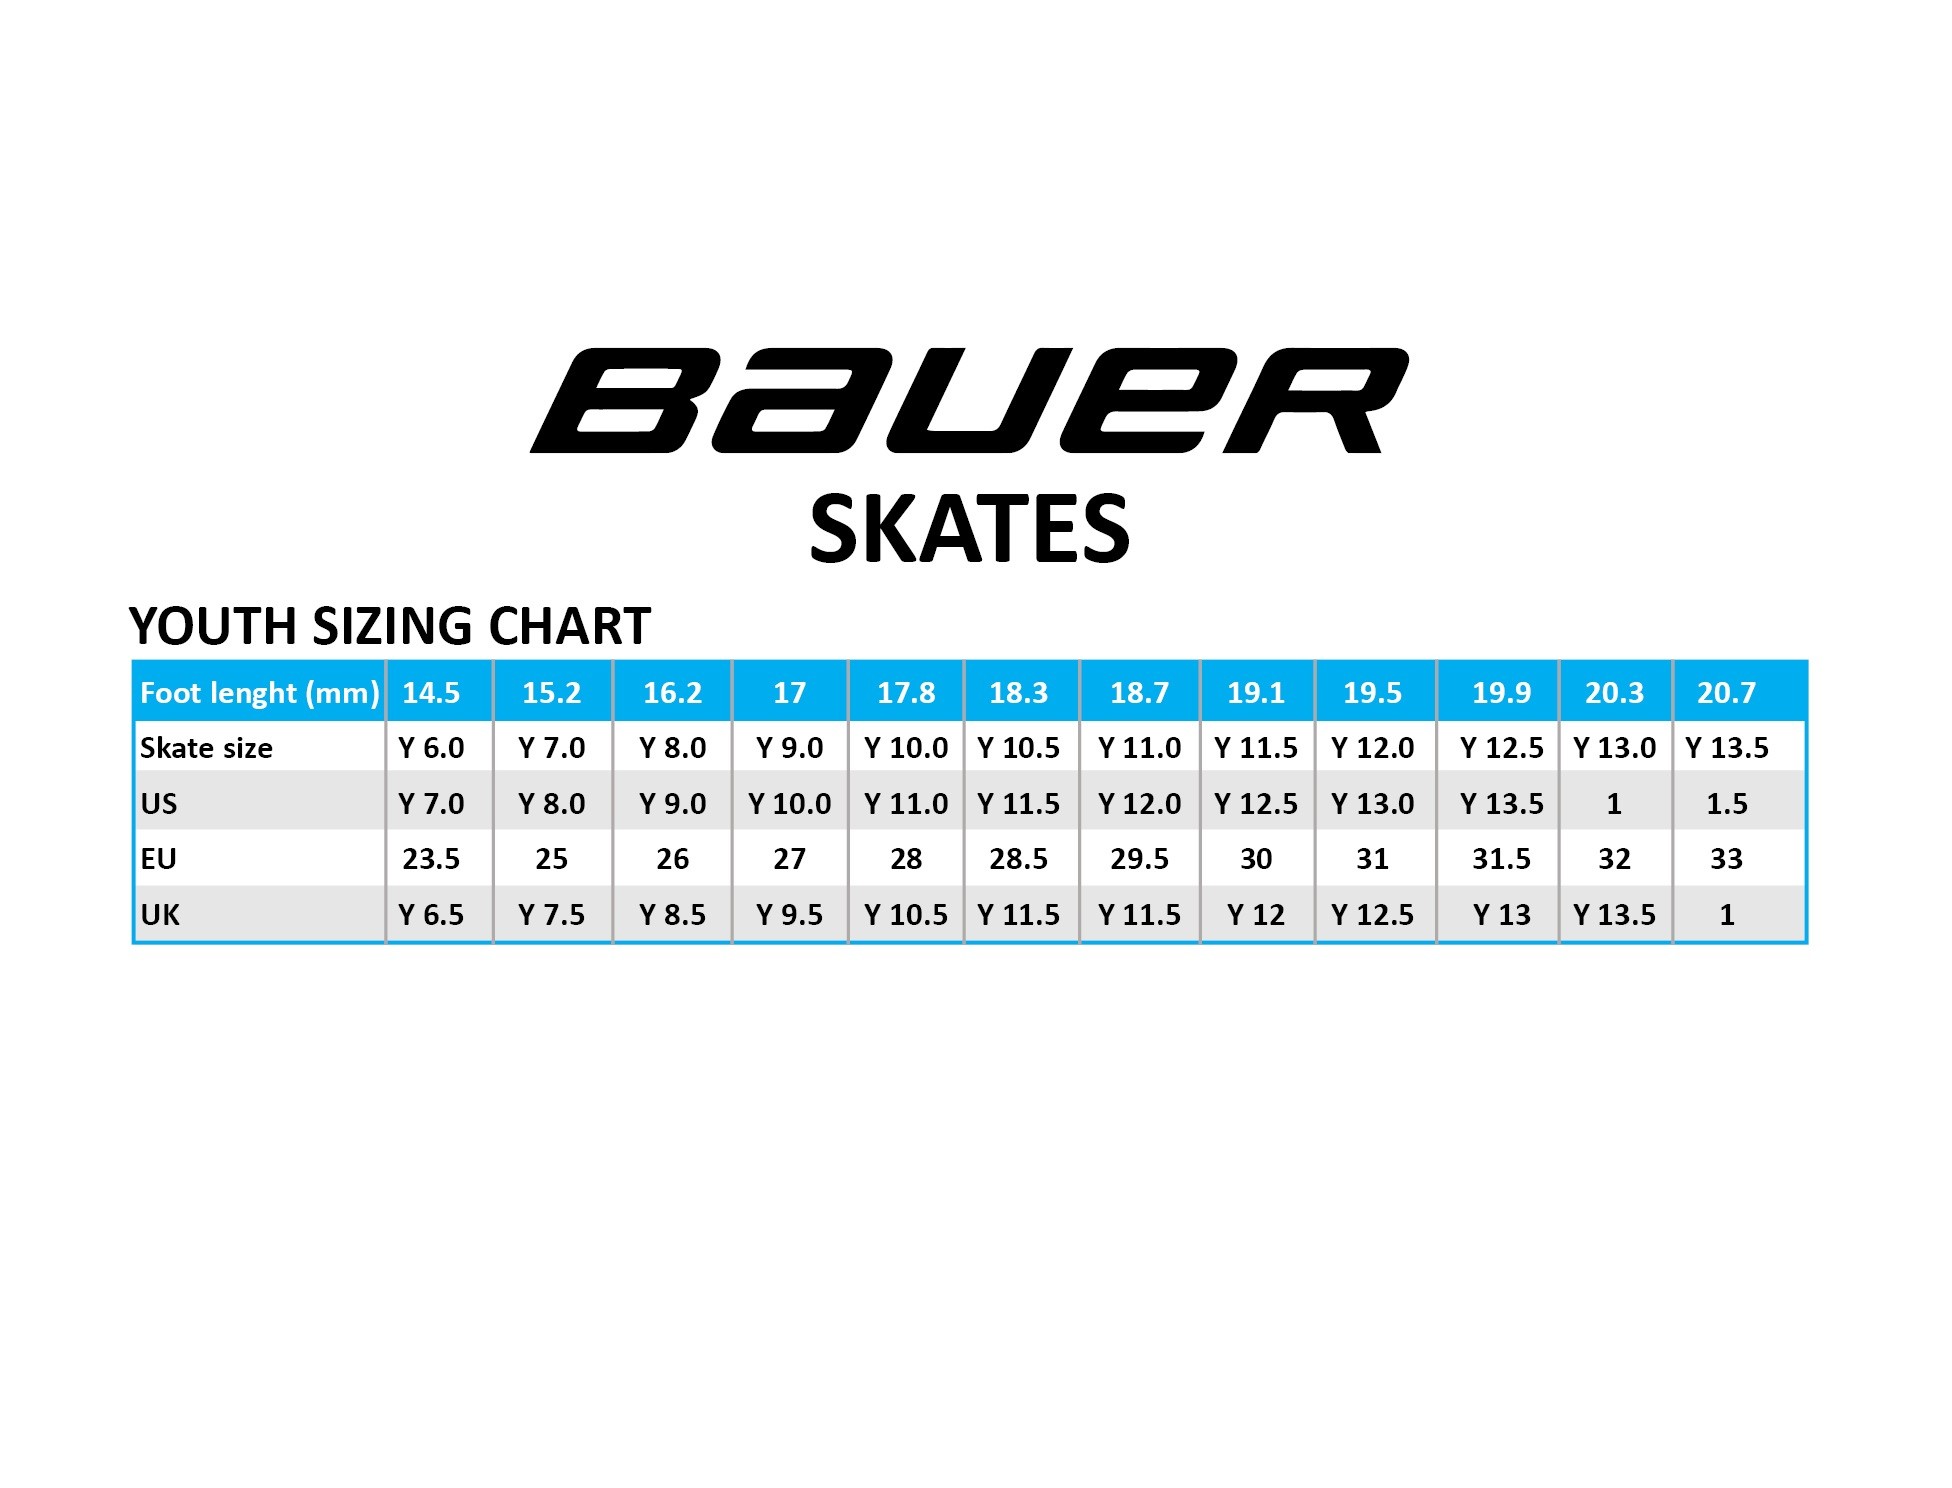 Ice Hockey Skate Size Chart